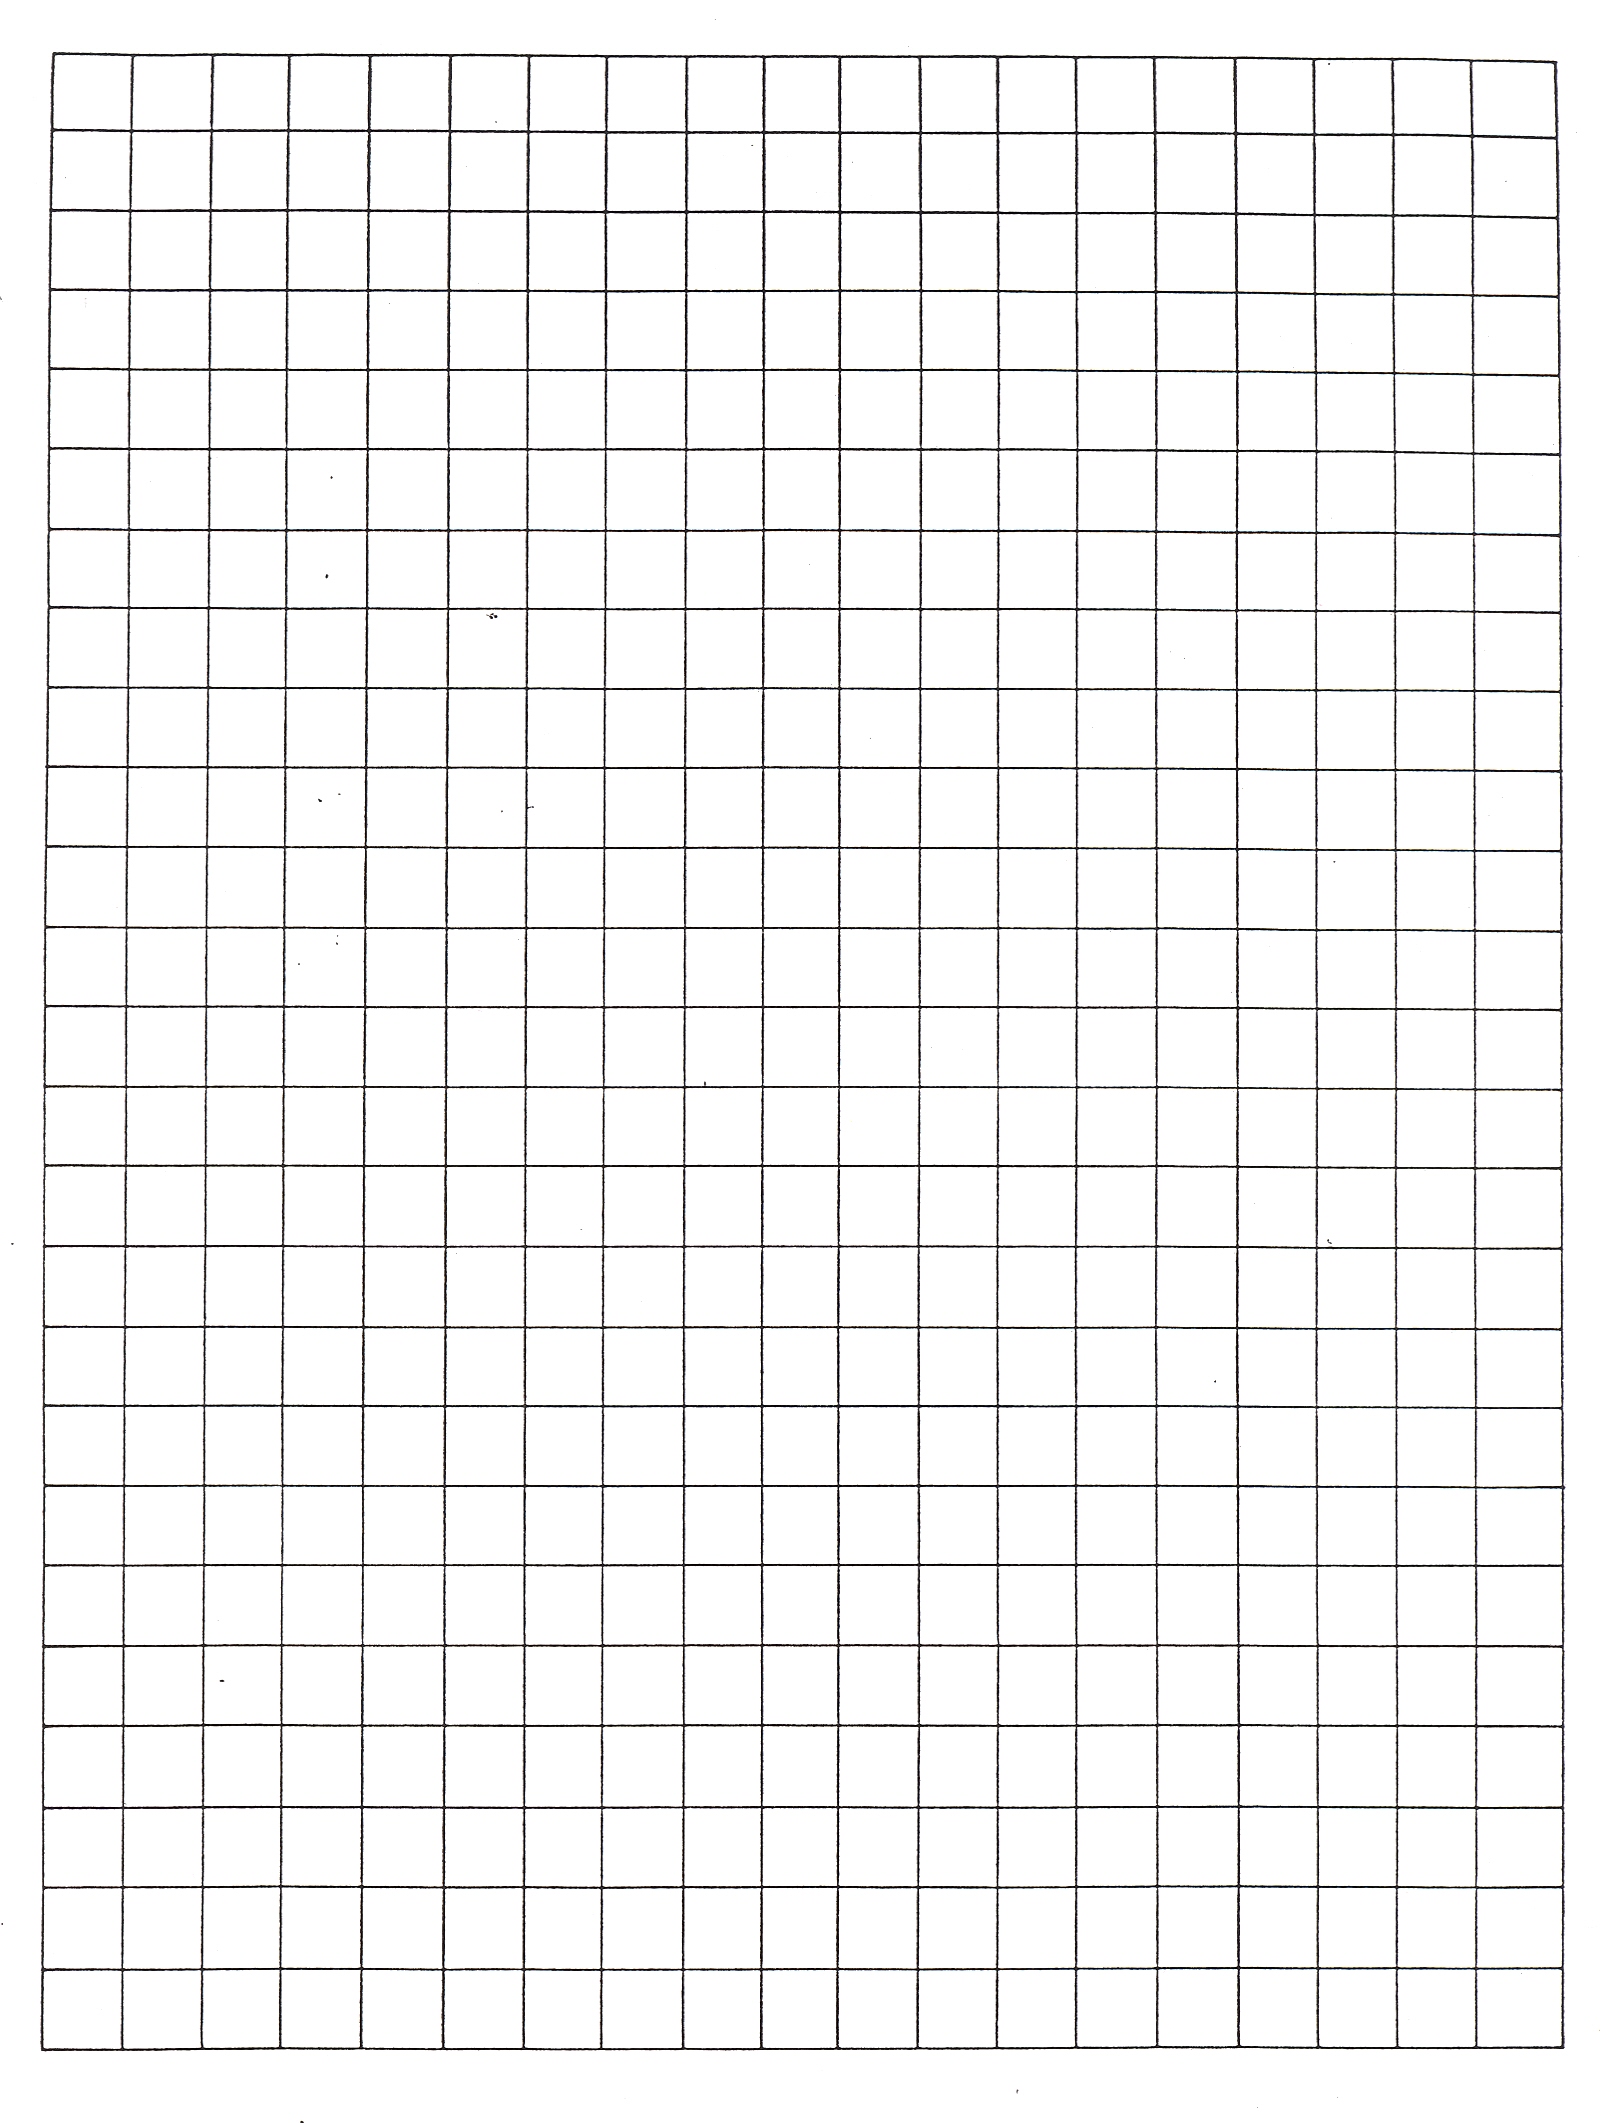 7 Best Images of Printable Centimeter Grid Paper 1 2 Inch Grid Paper